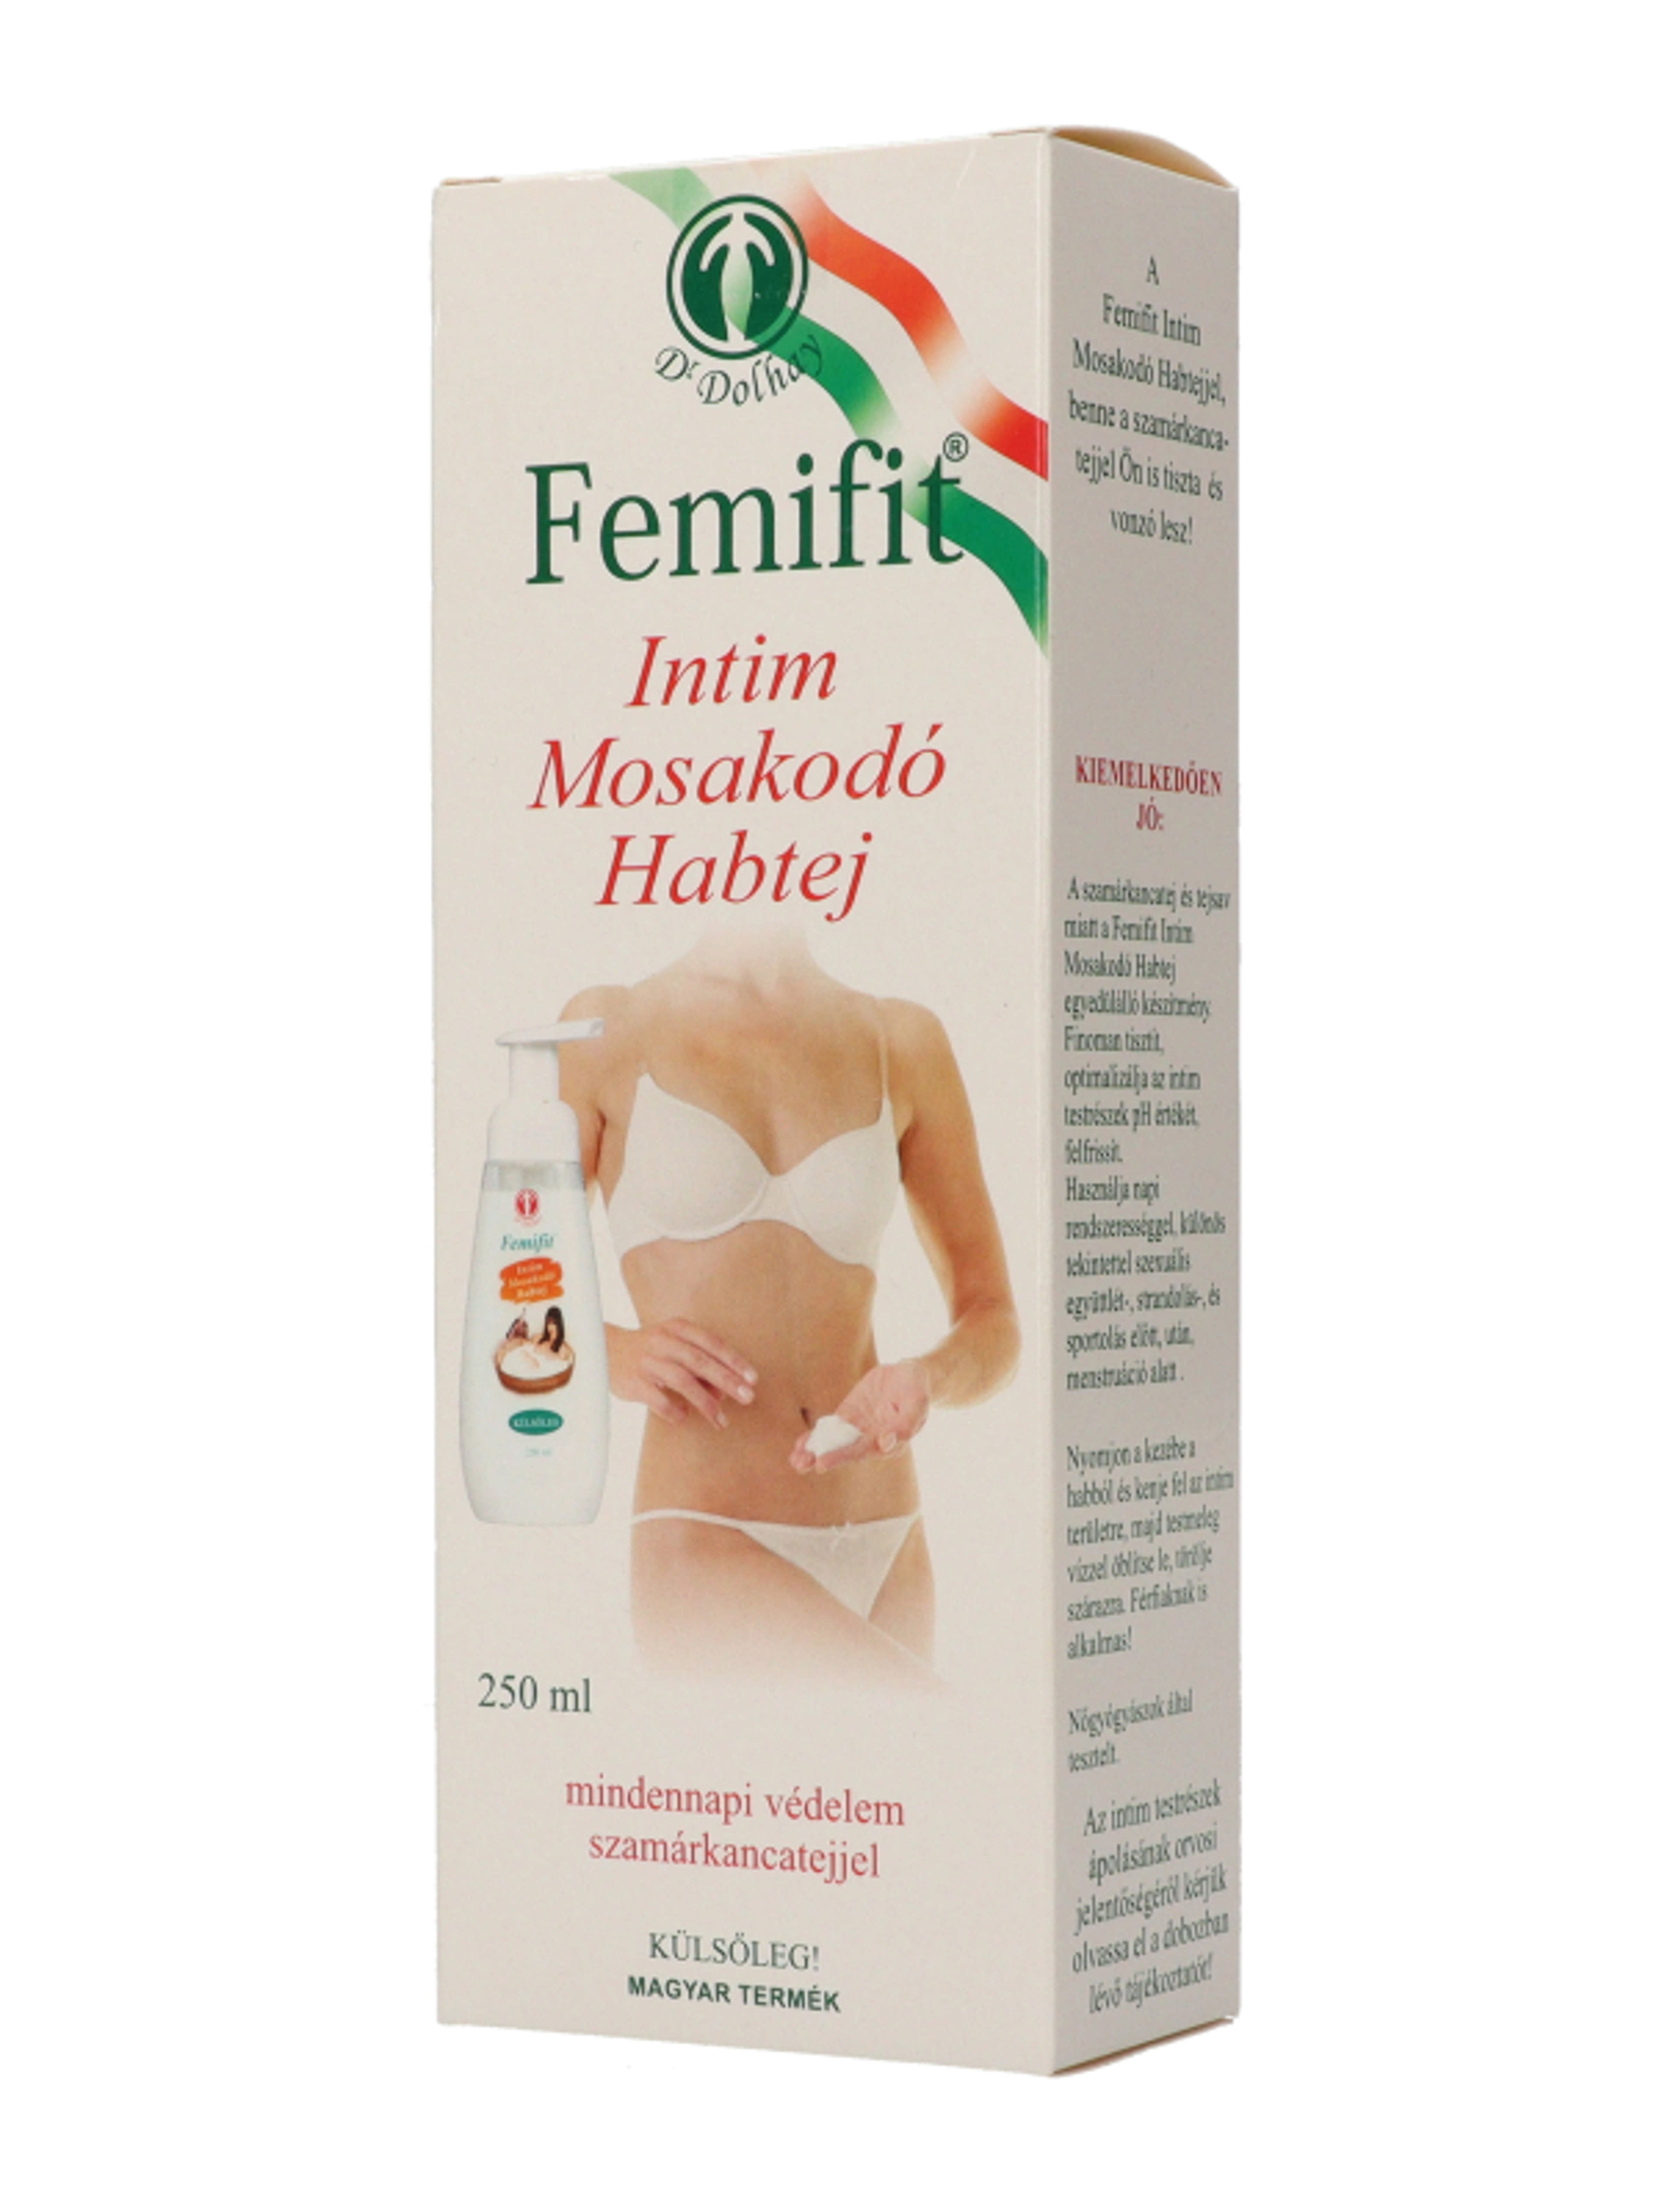 Femifit intim mosakodó habtej - 250 ml-3